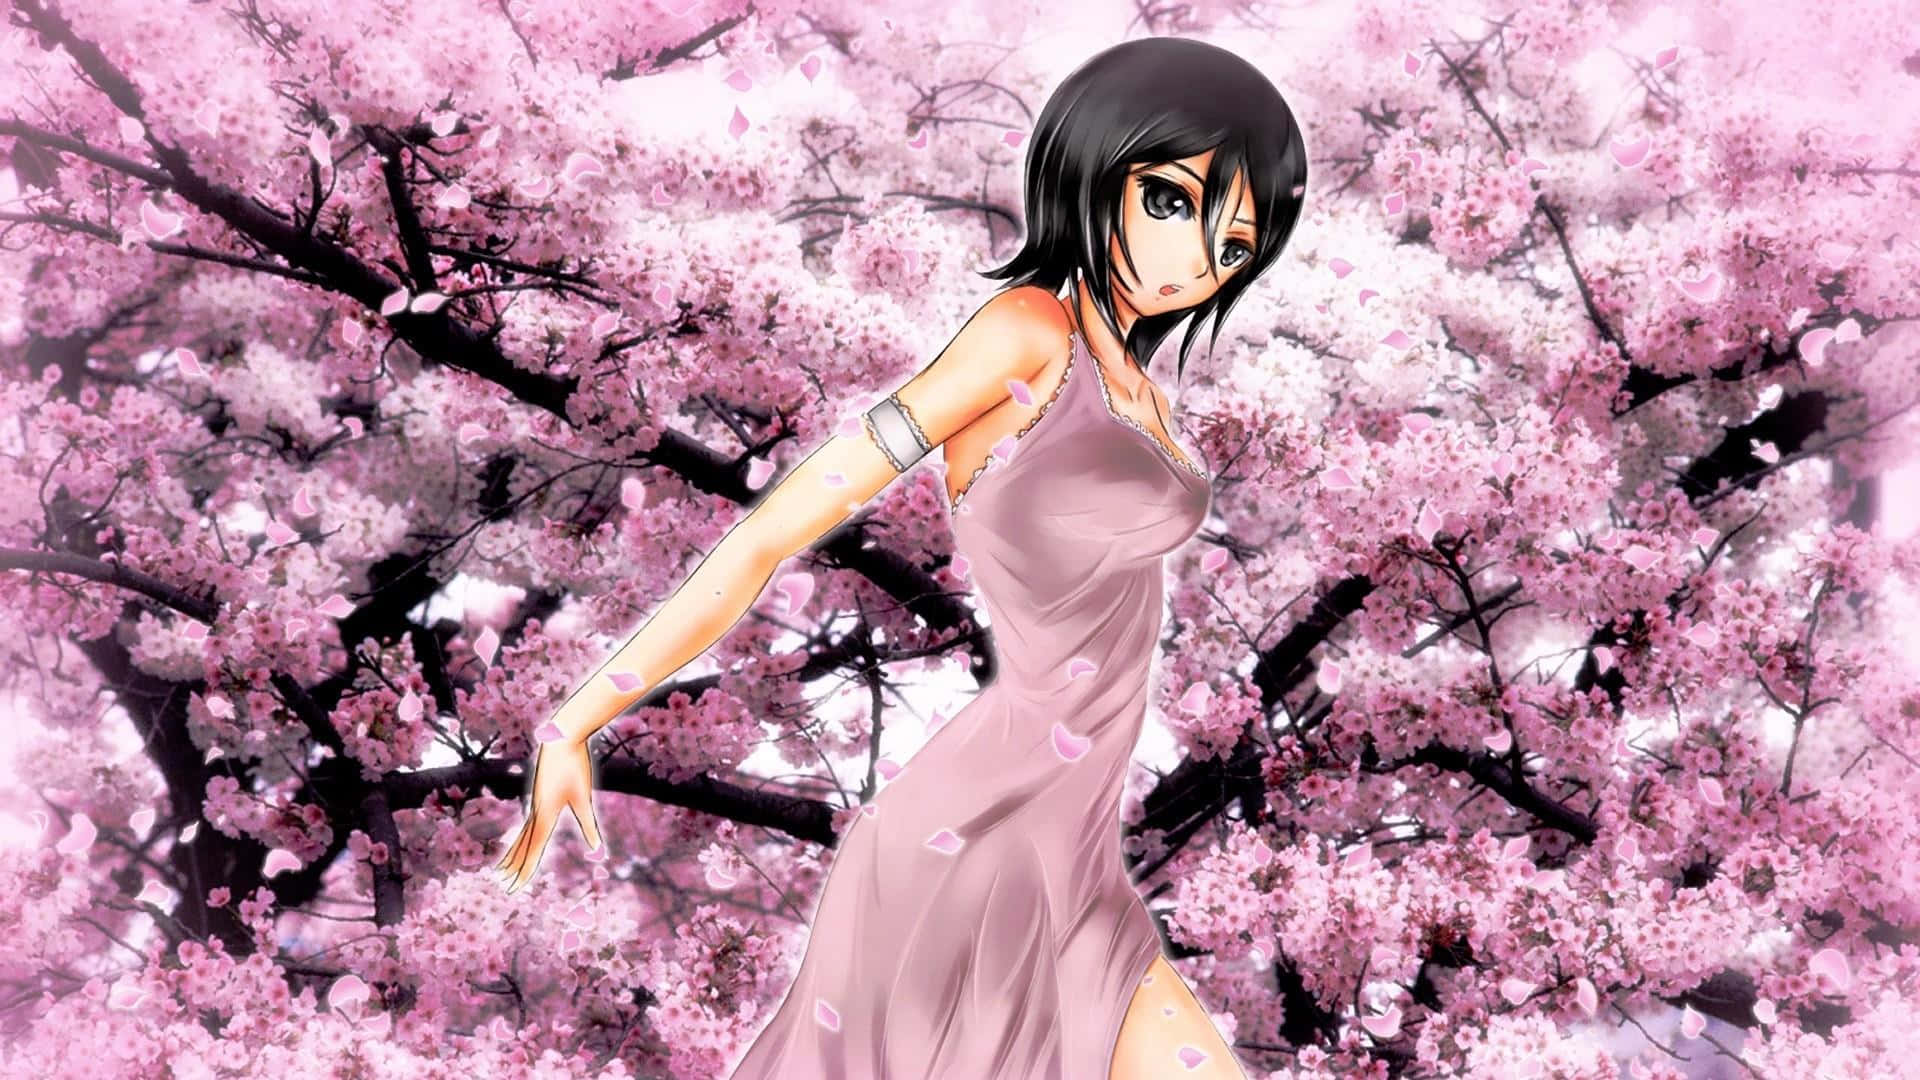 "Cherry Blossom in Bloom" Wallpaper